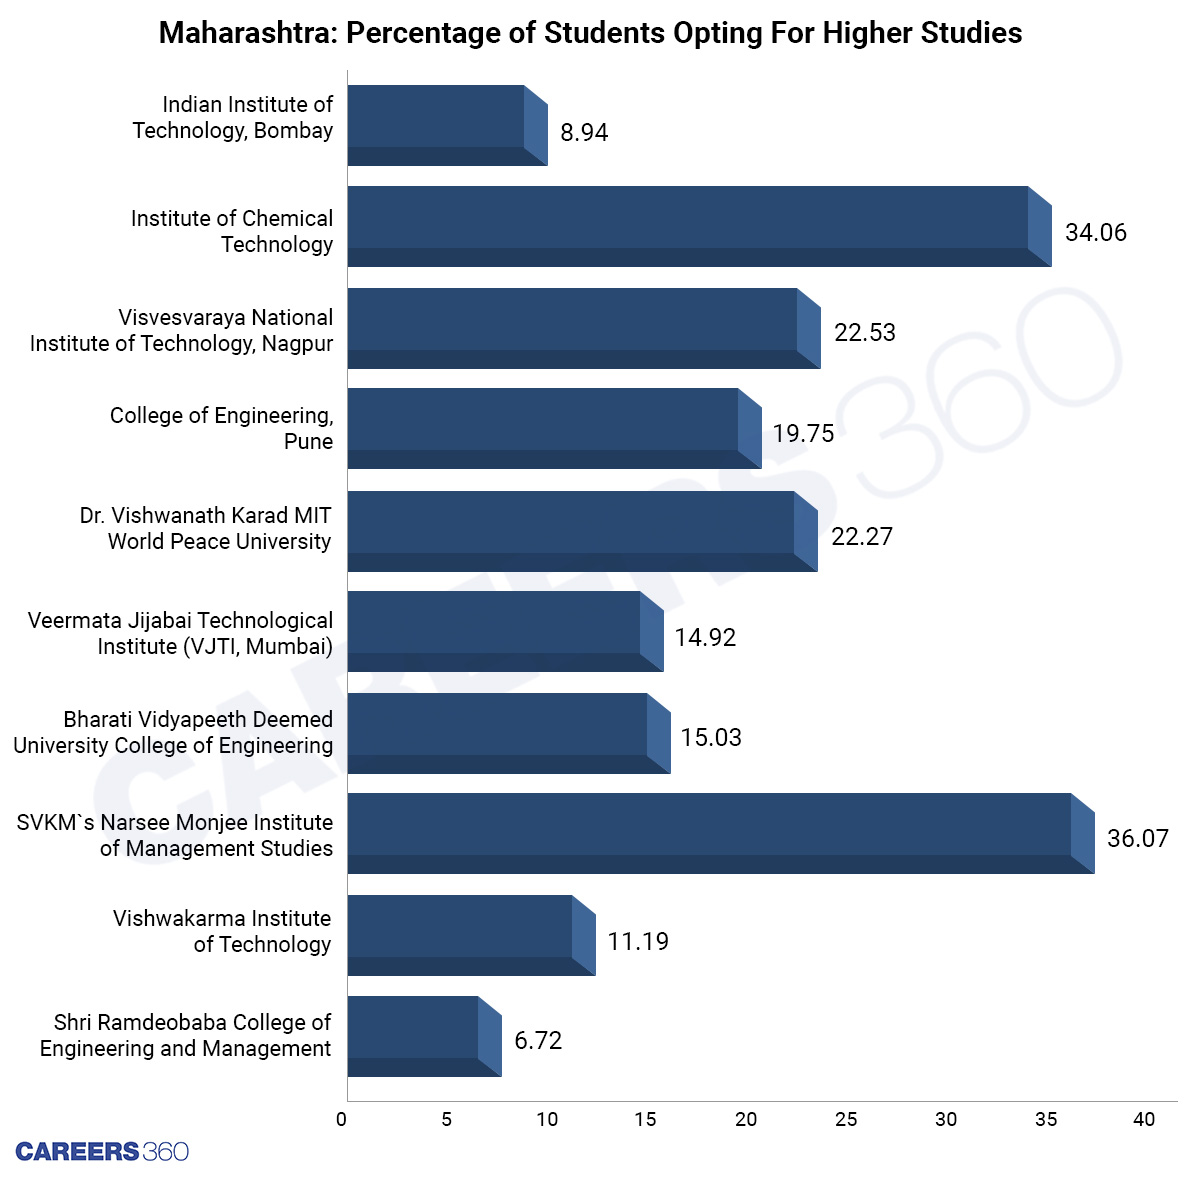 Top 10 Engineering Institutes: Higher Studies